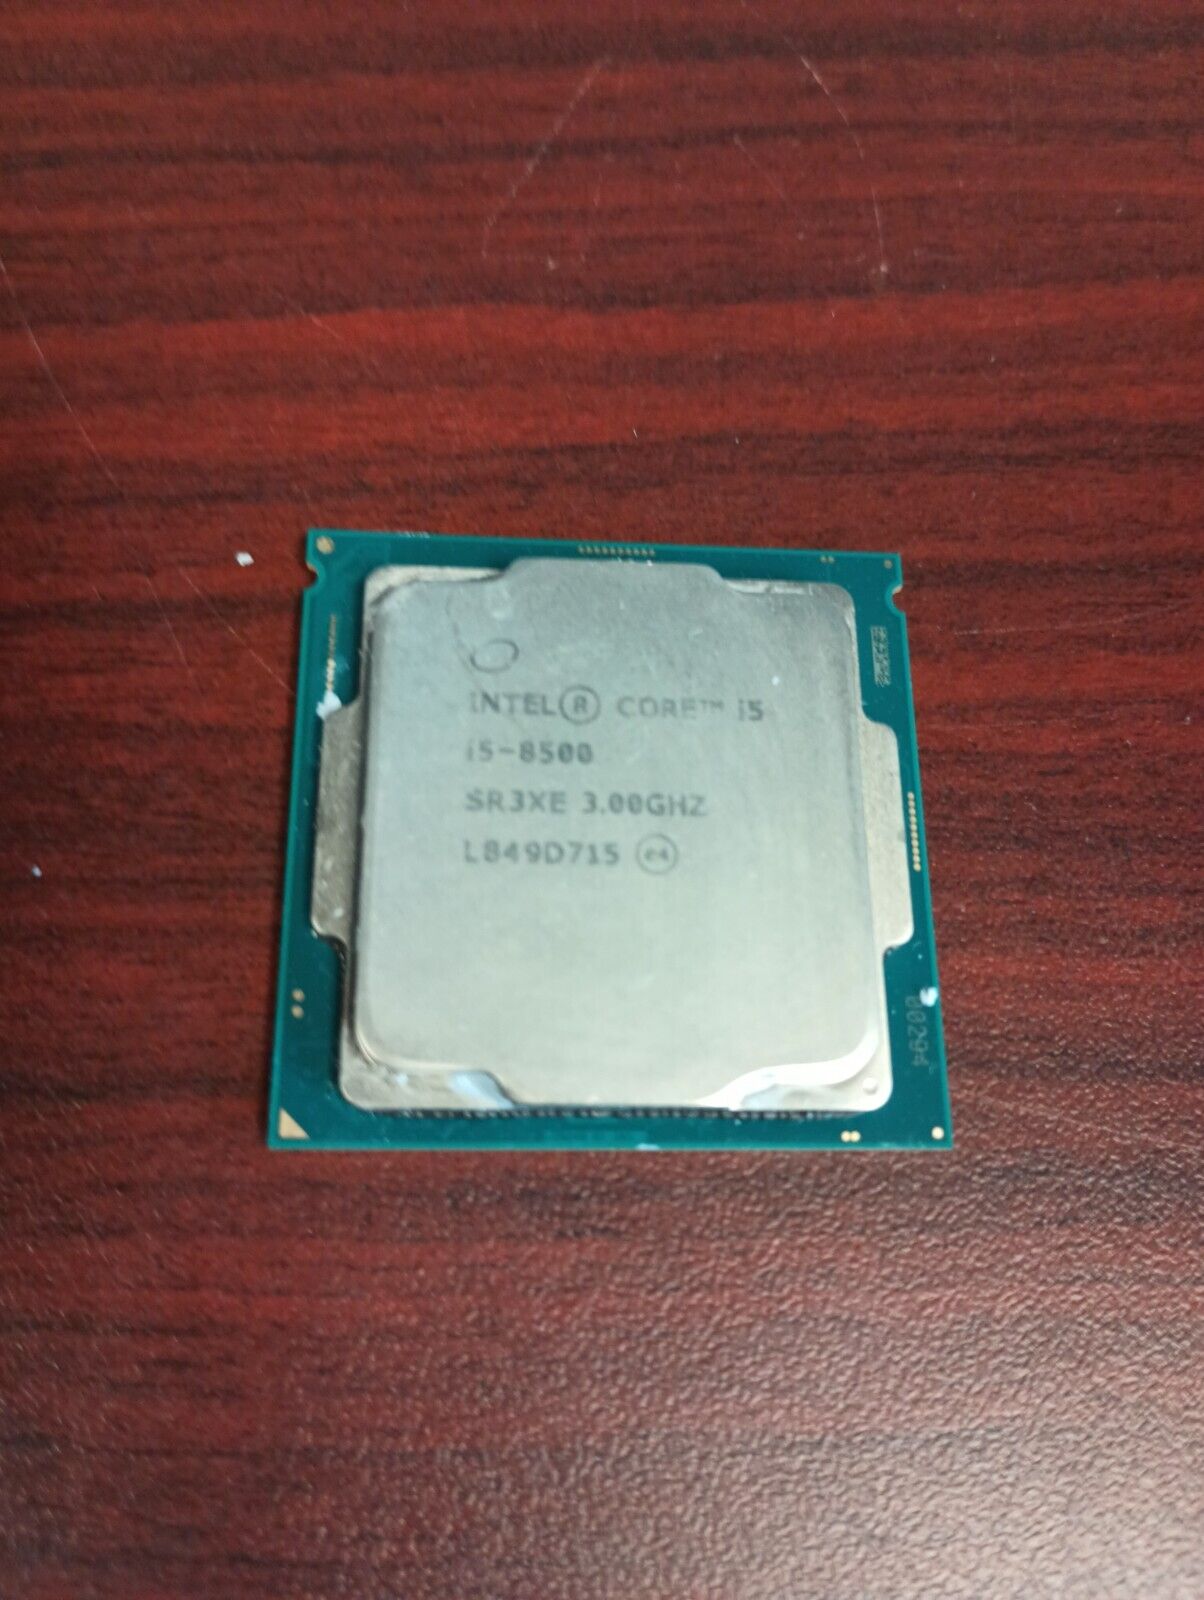 Intel Core i5-8500 3.00GHz - SR3XE CPU - Processor #95